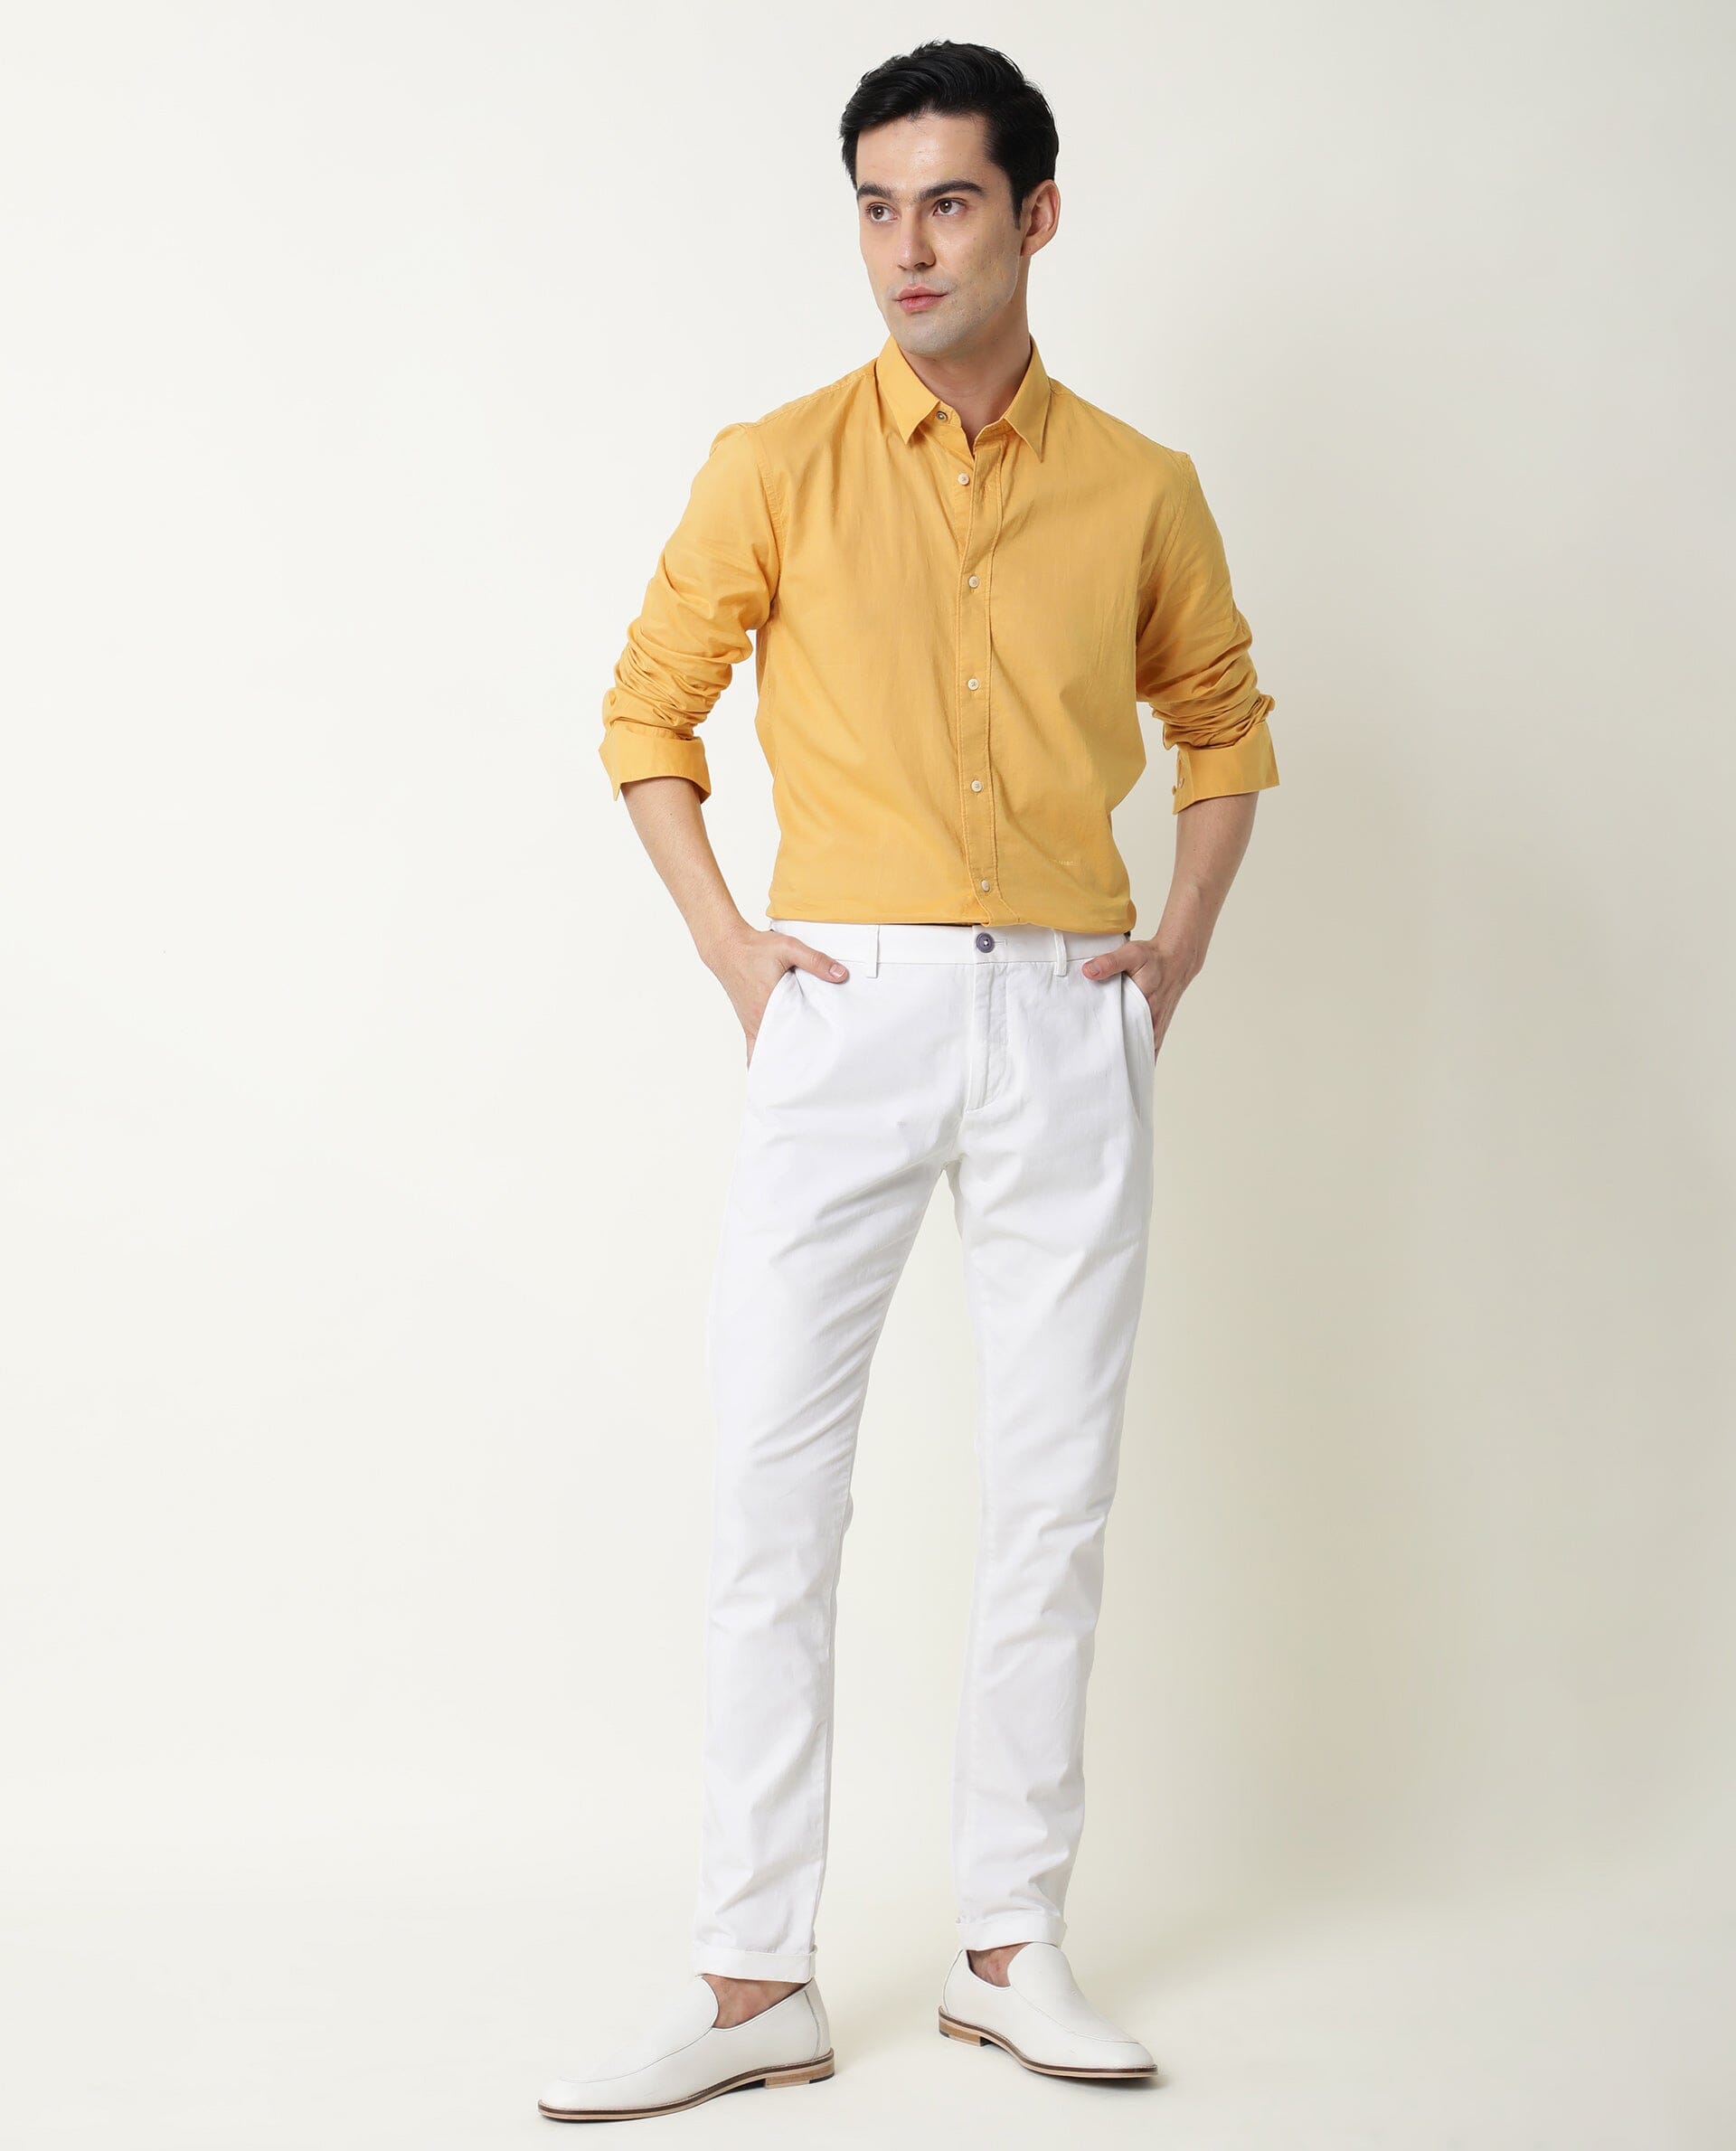 Yellow shirt white pants | Yellow shirts, White pants, White jeans